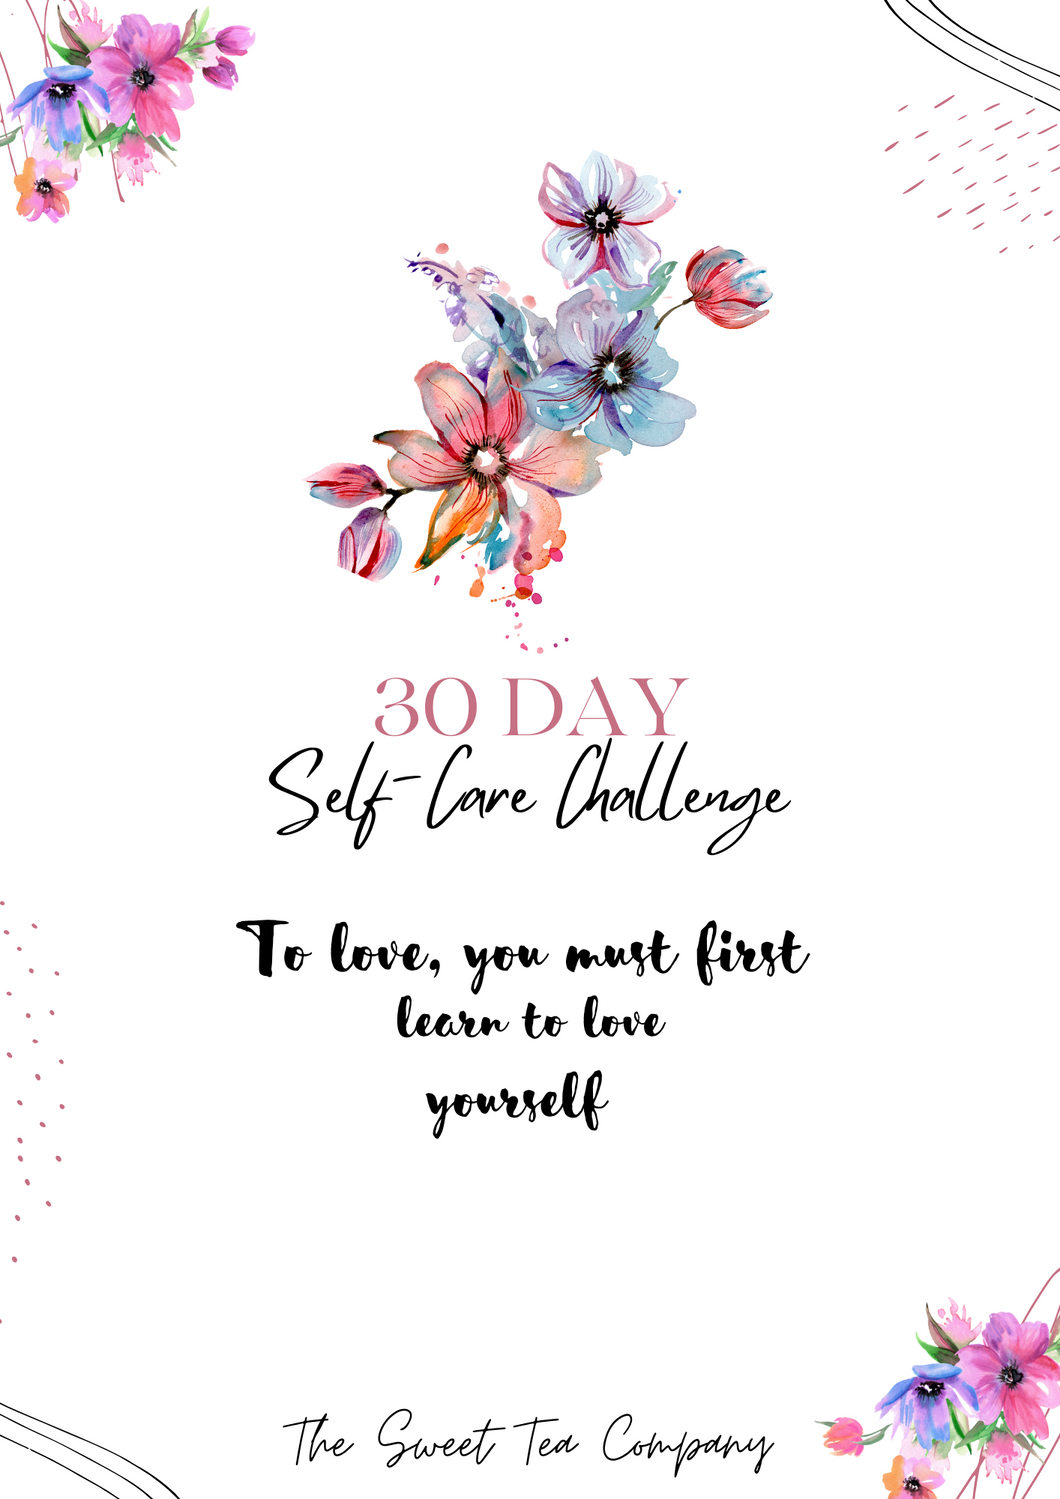 30 Day Self-Care Challenge (Digital Download)